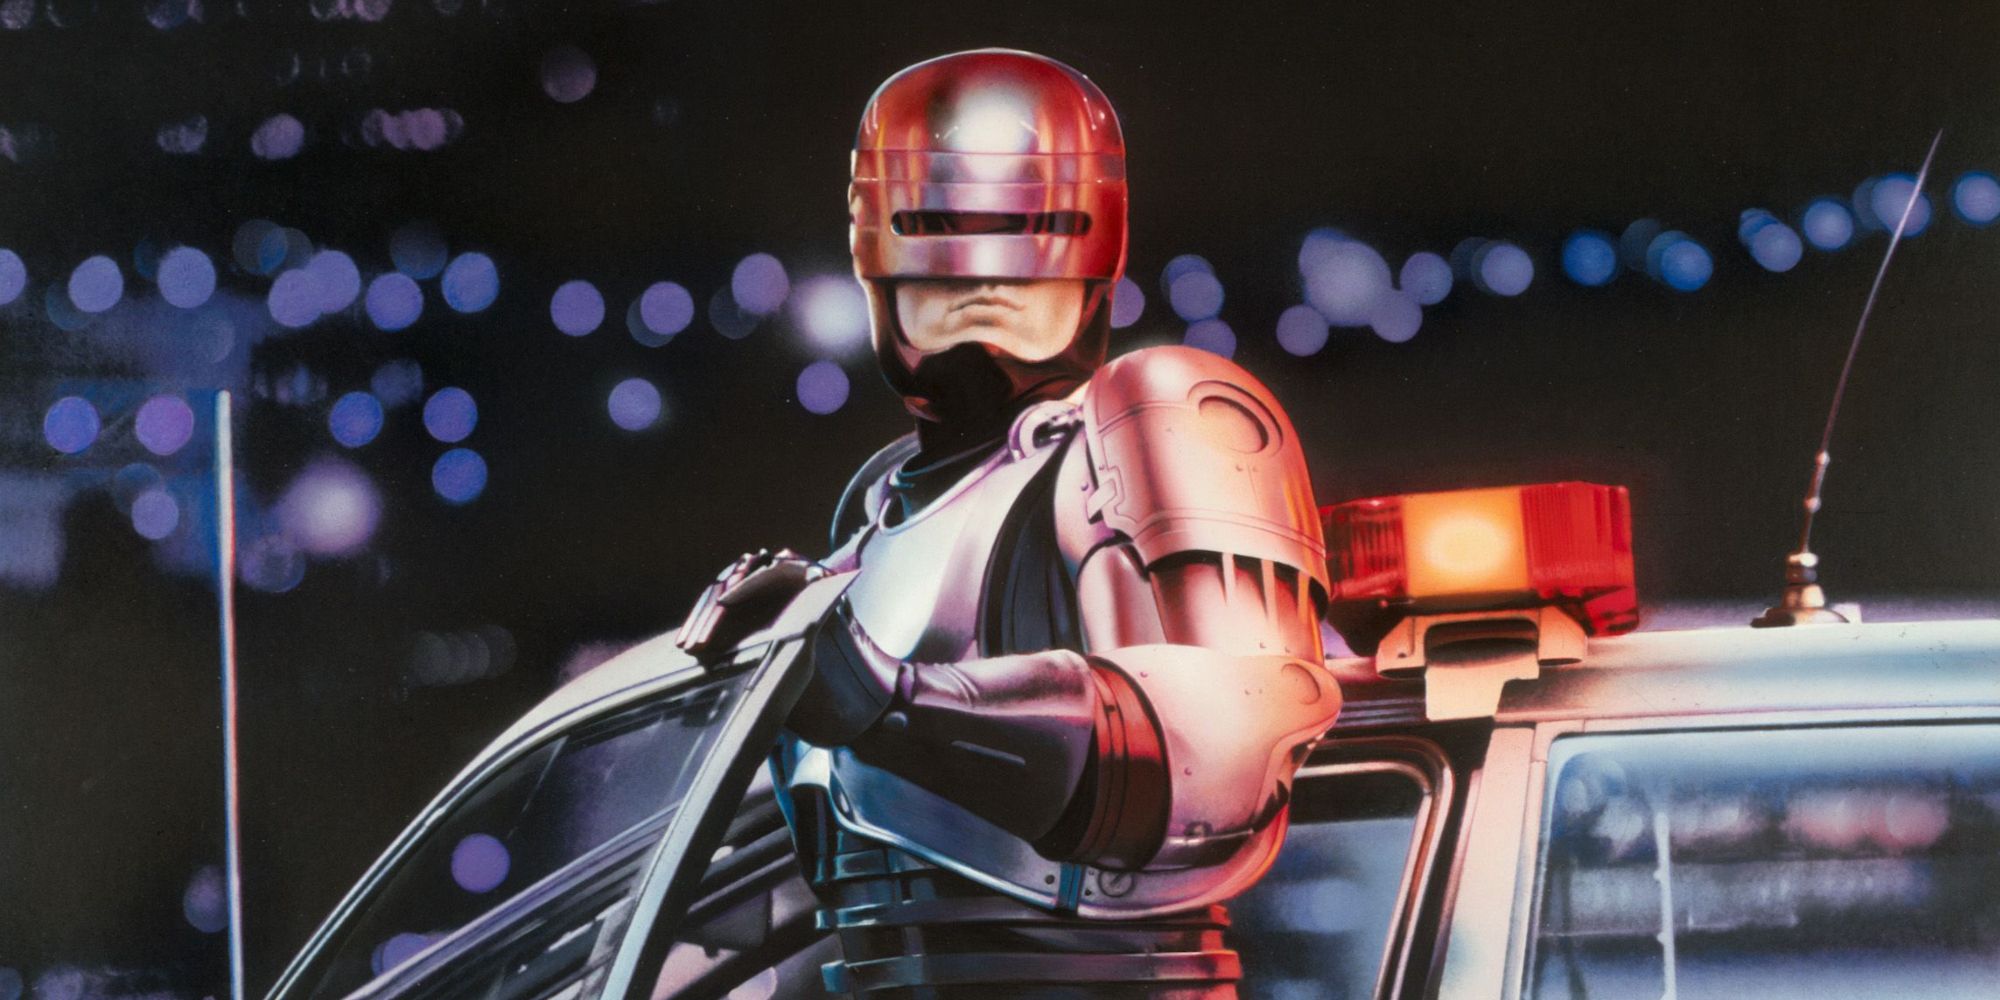 The Robocop 1987 movie sci-fi poster